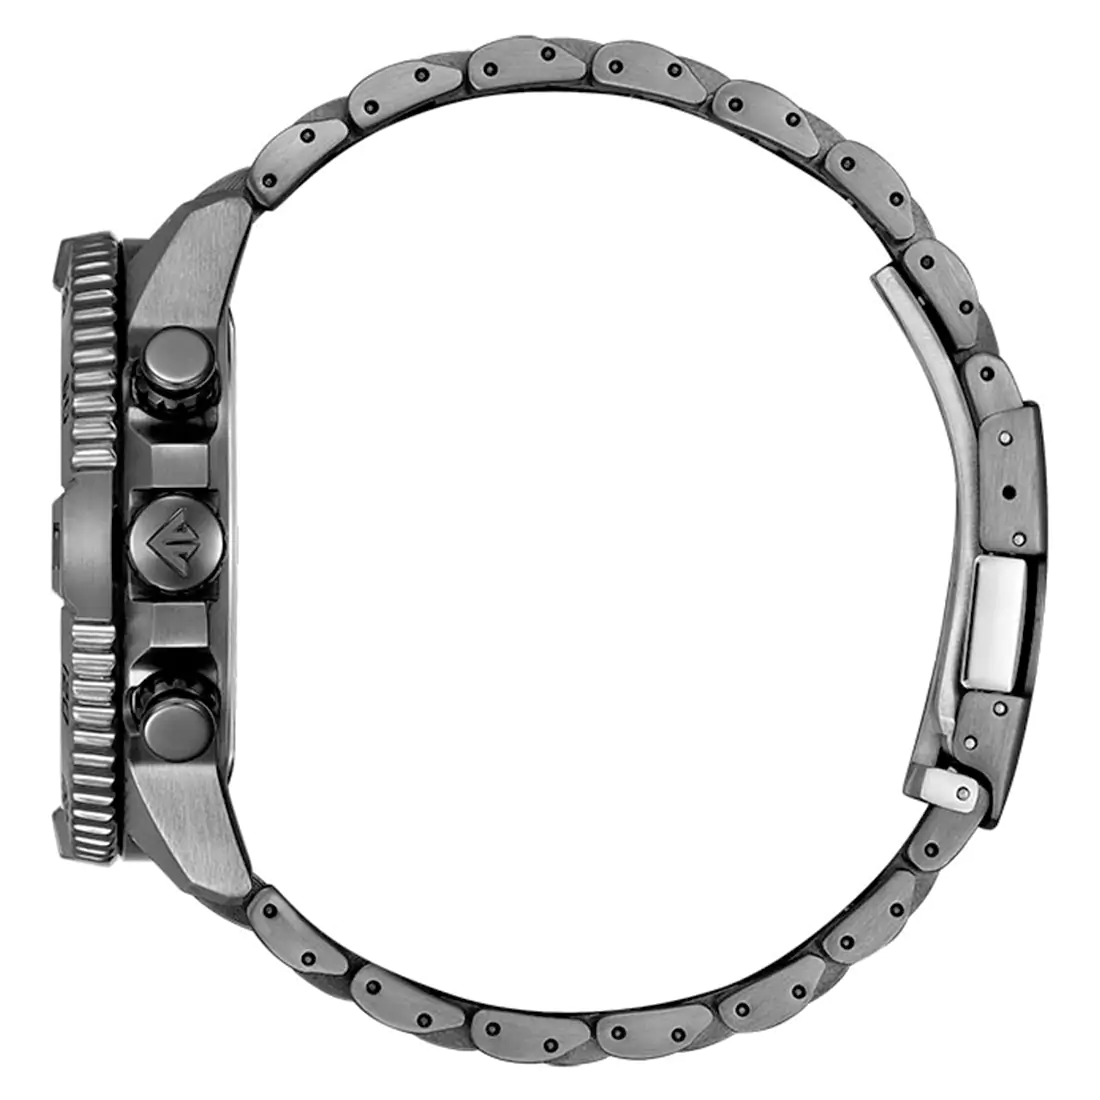 CITIZEN Eco-Drive Radio Controlled Navihawk Black Stainless Steel Bracelet AT8227-56X